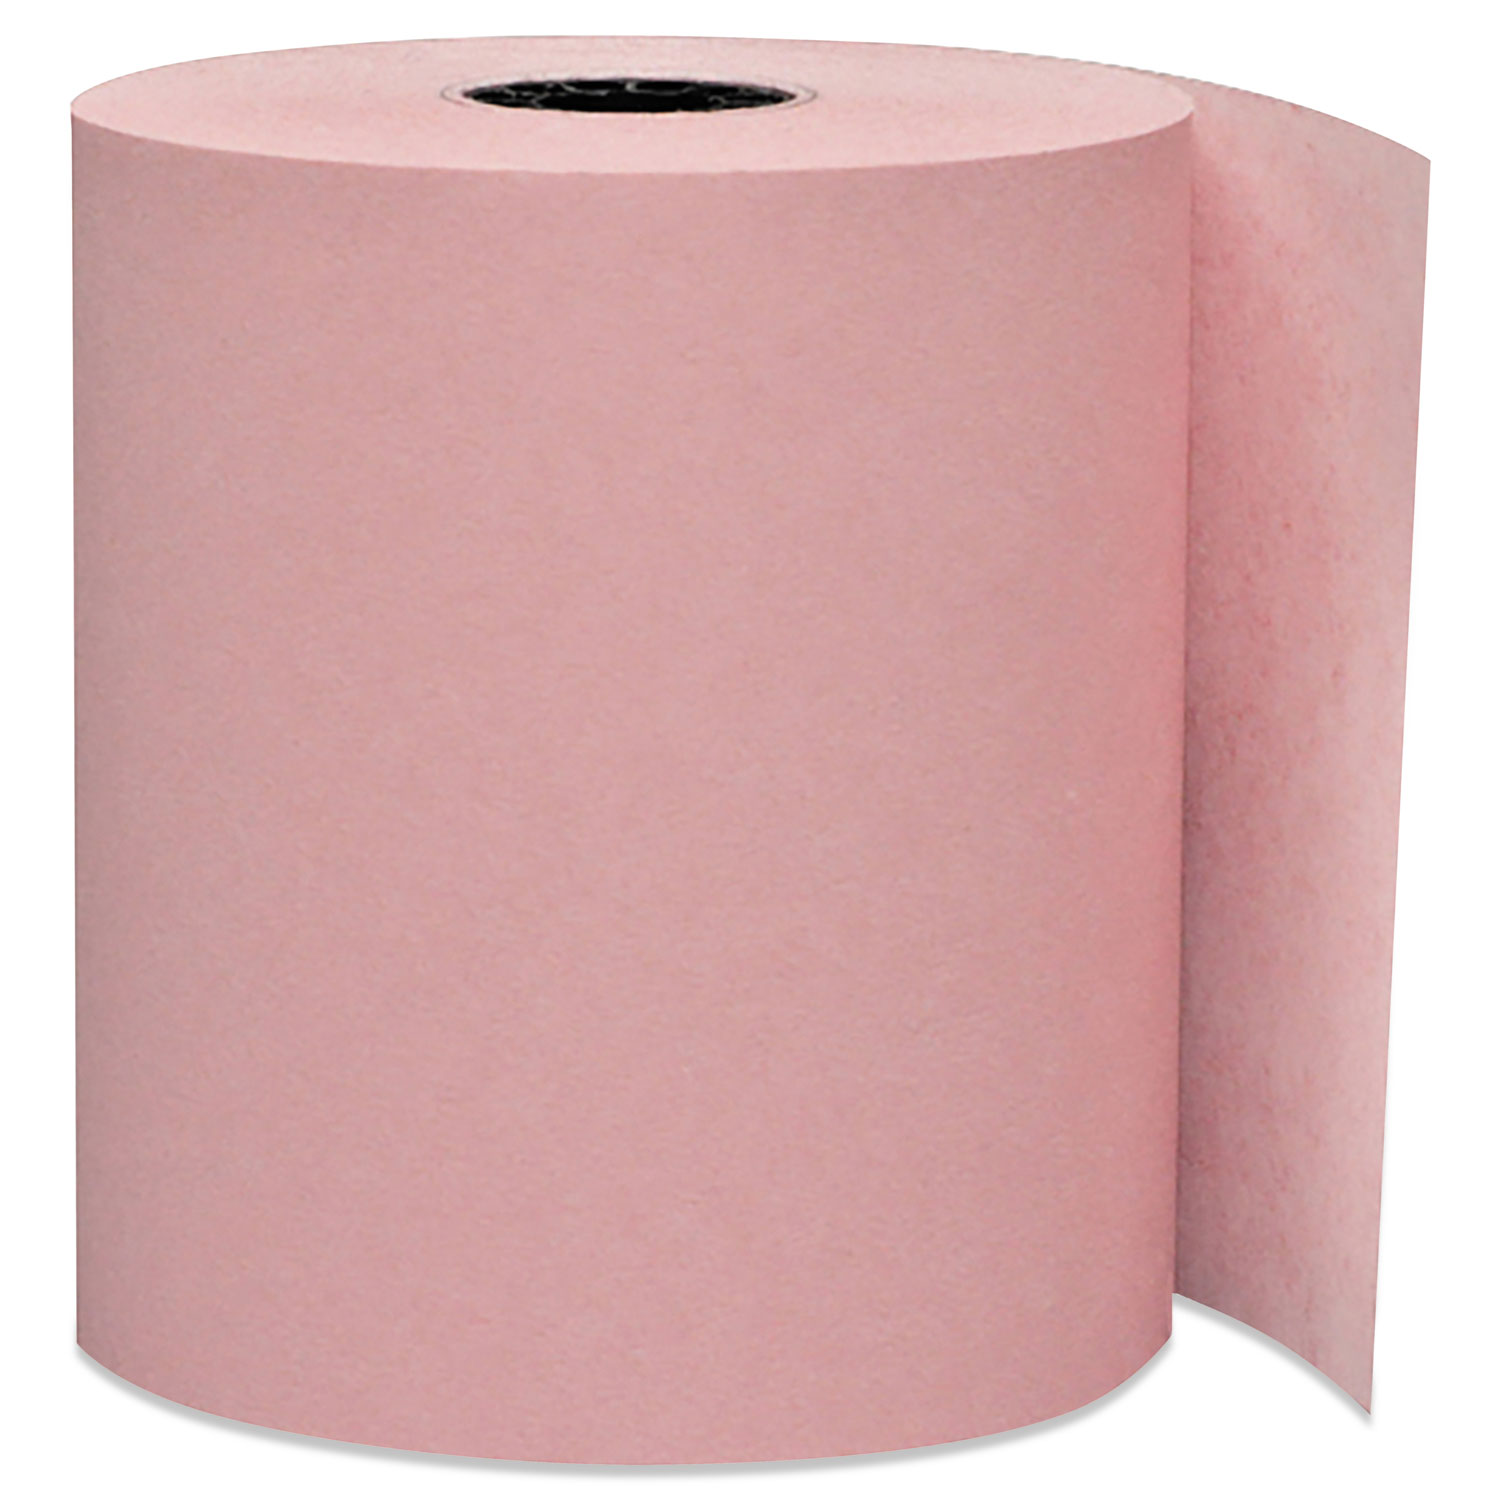  Iconex N3165P Impact Bond Paper Rolls, 0.45 Core, 3 x 165 ft, Pink, 50/Carton (ICX90922017) 